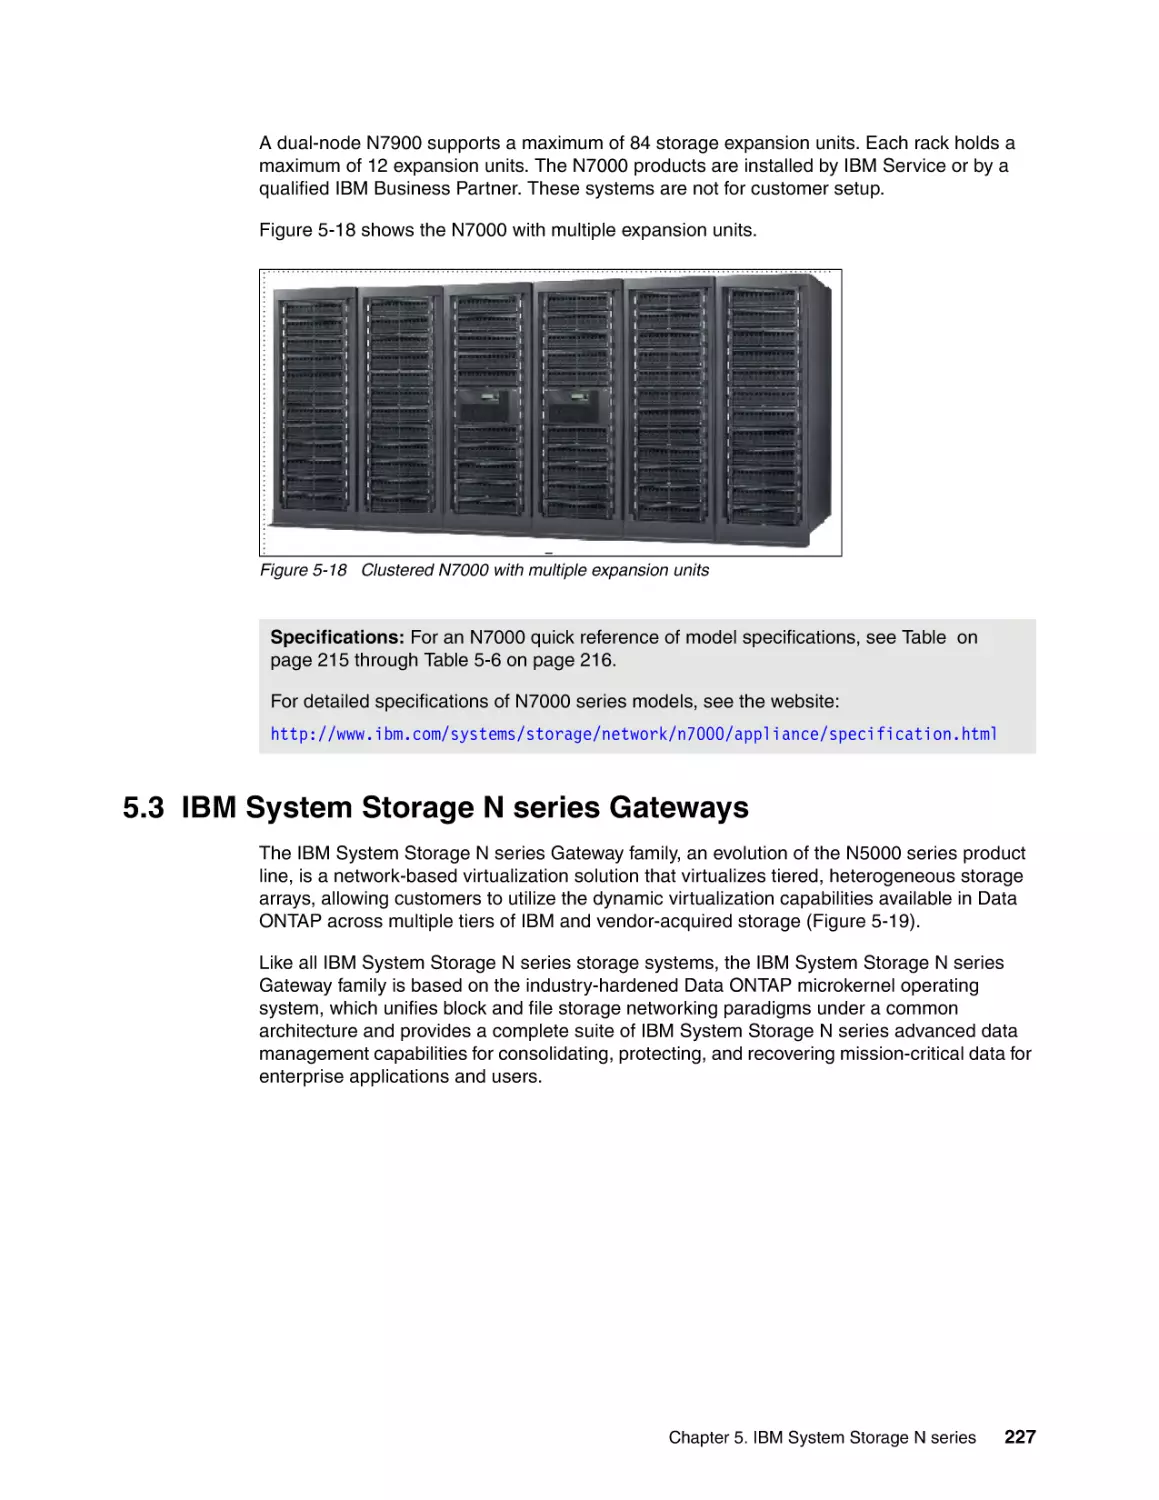 5.3 IBM System Storage N series Gateways